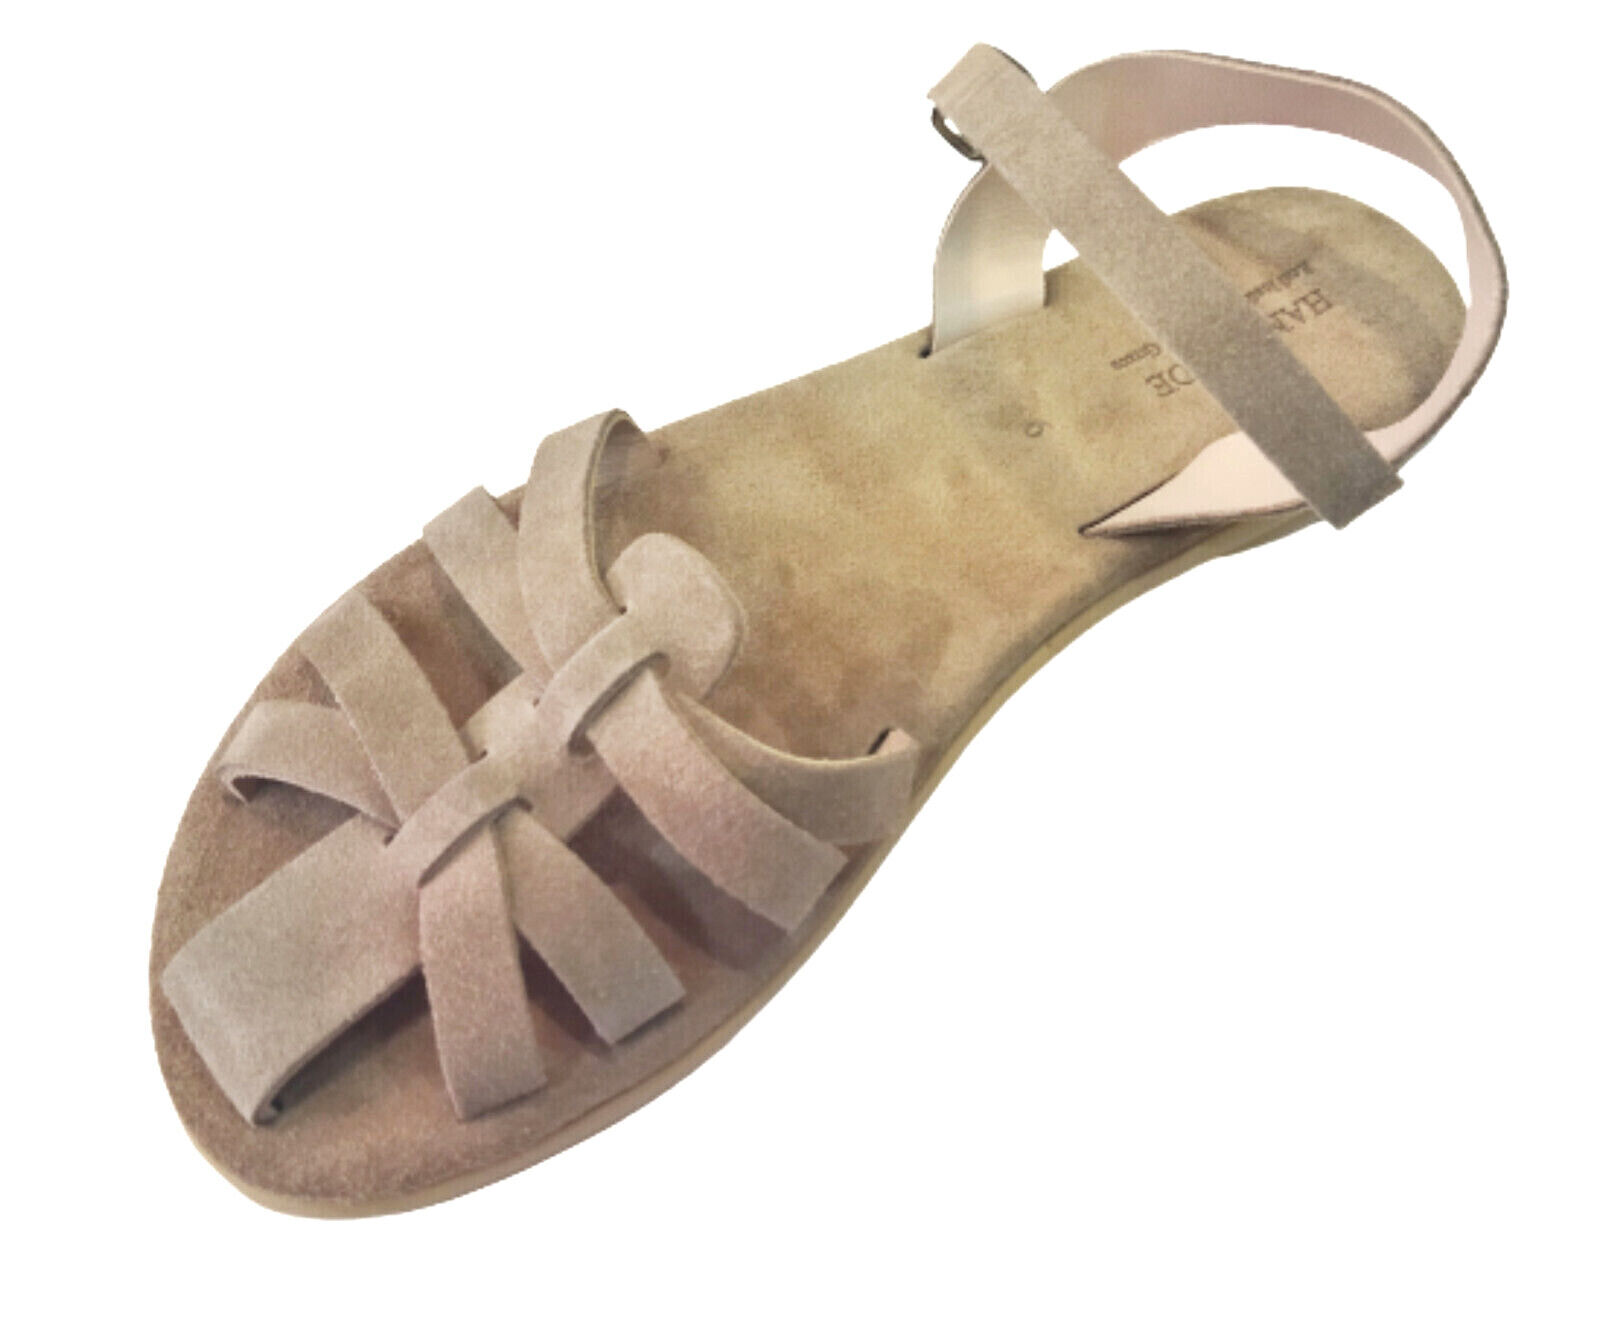 1066 greek handmade leather sandals